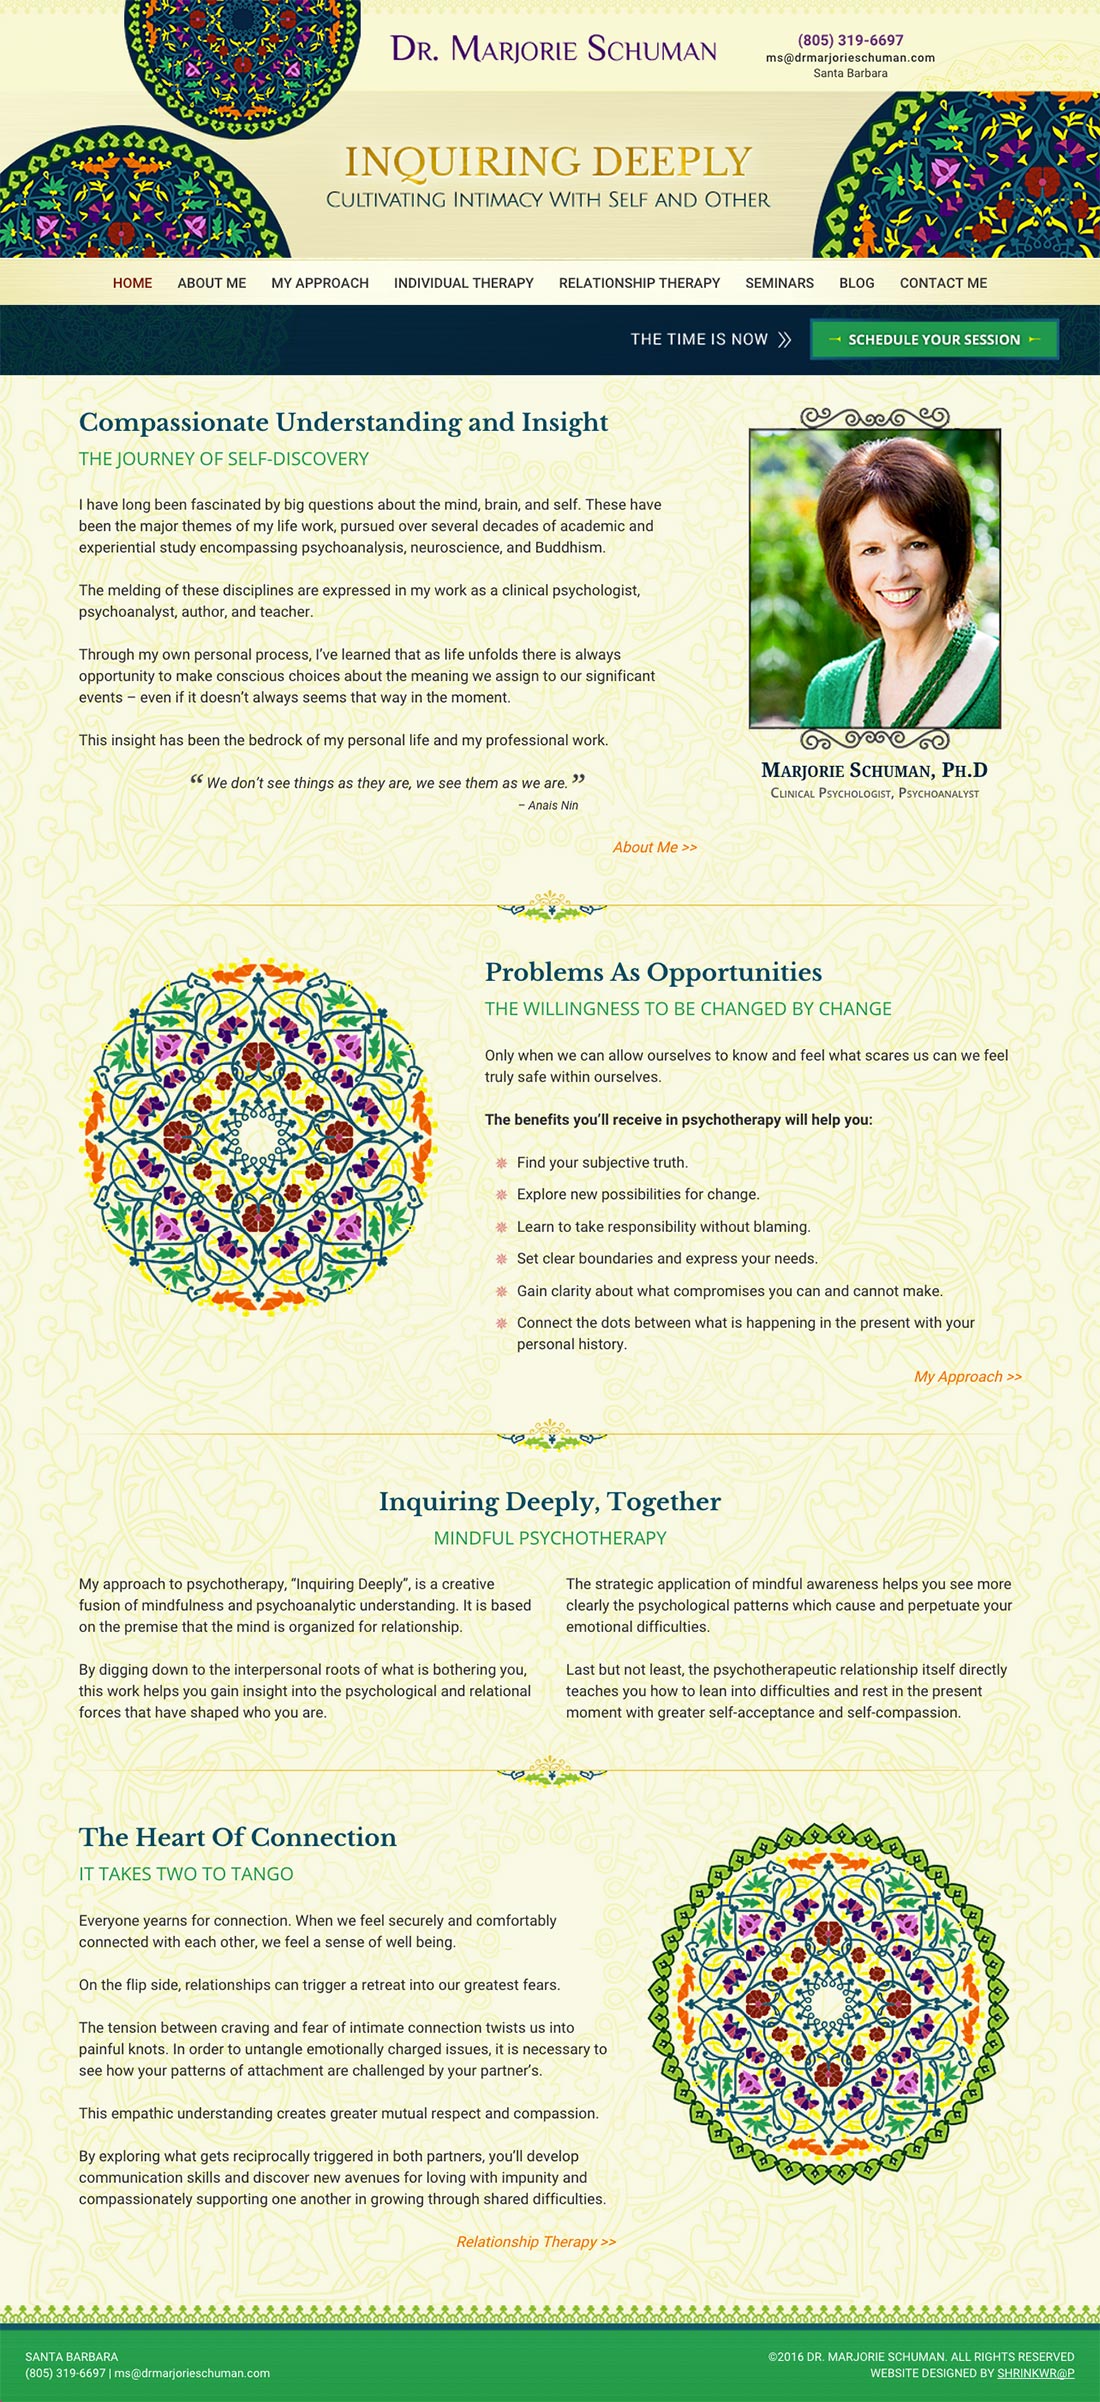 Branded Design & Development of a Responsive Website in WordPress